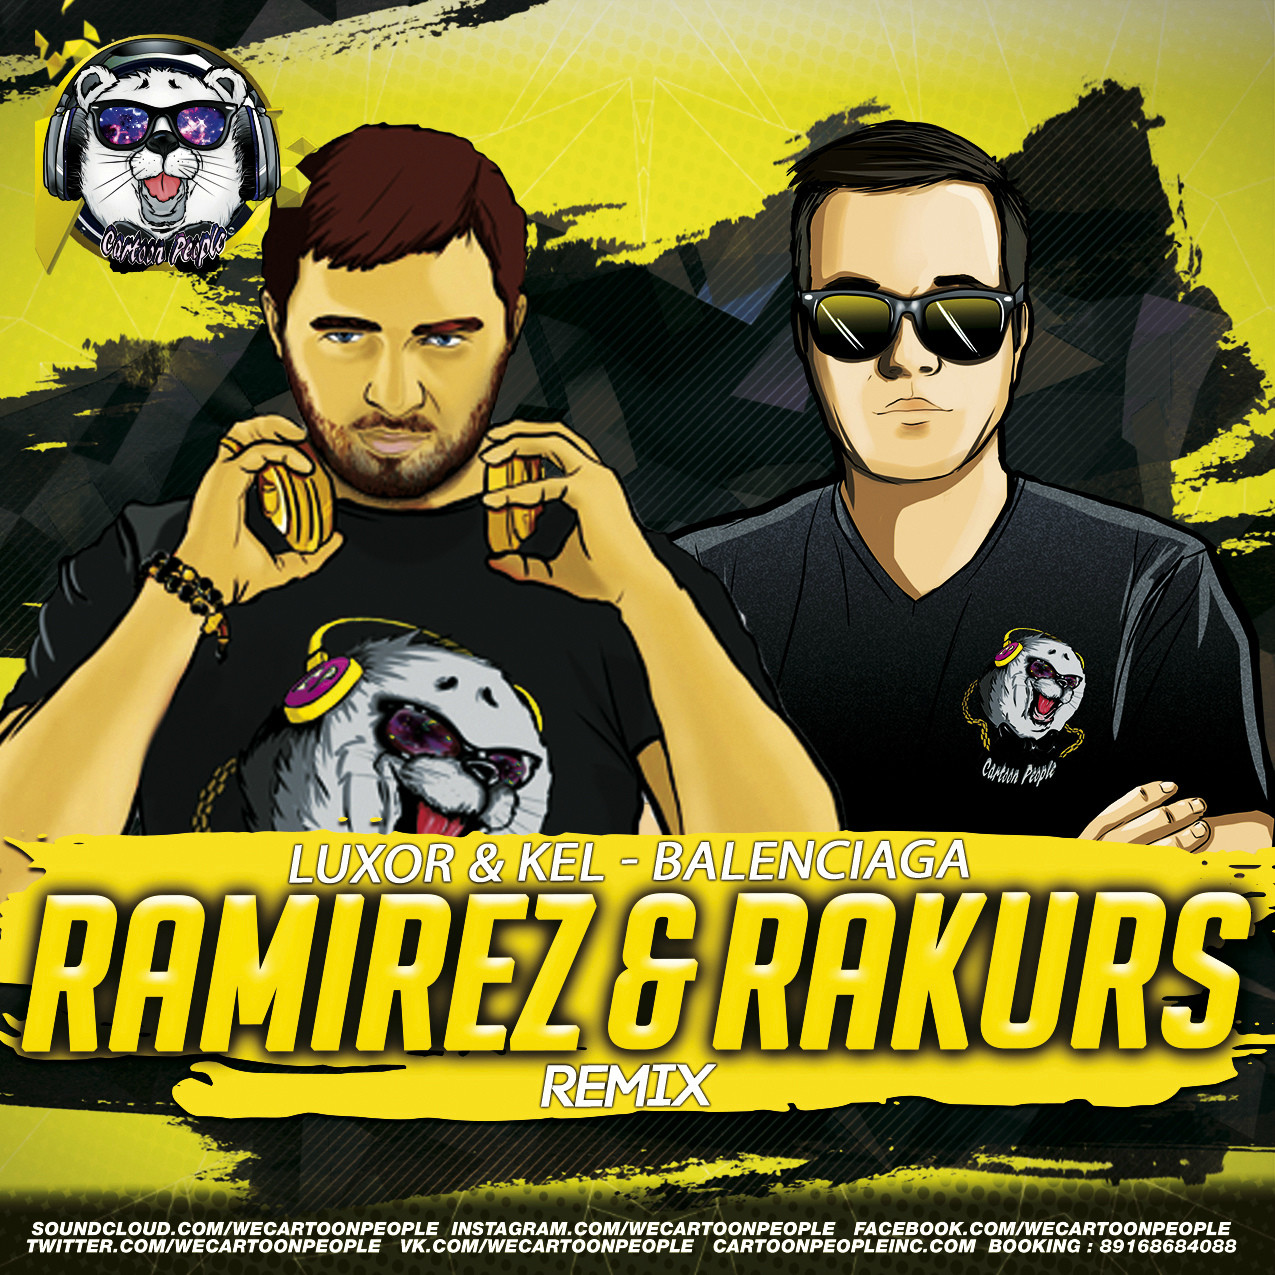 Understrege Glæd dig Indflydelsesrig Luxor & Kel - Balenciaga (Ramirez & Rakurs Radio Edit) – DJ RAMIREZ